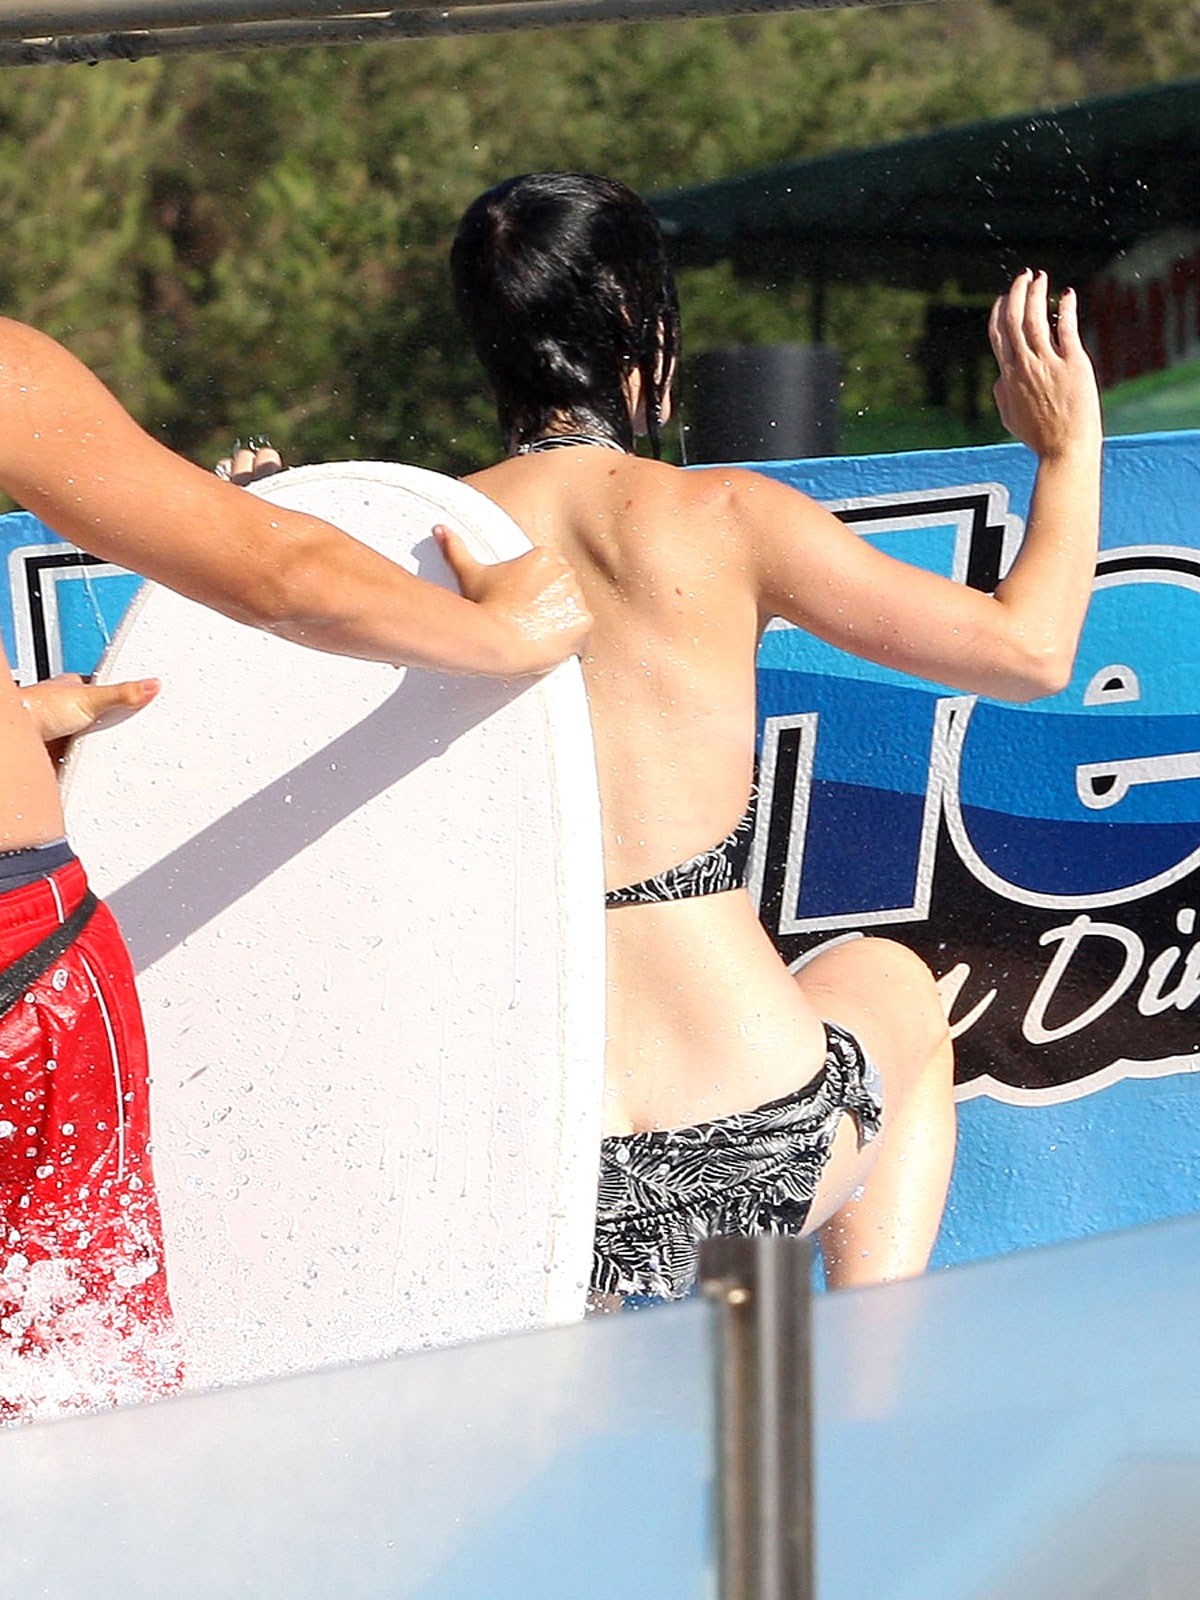 KATY PERRY Bikini Bottoms Fall Down at the Water Park in San Dimas - HawtCe...